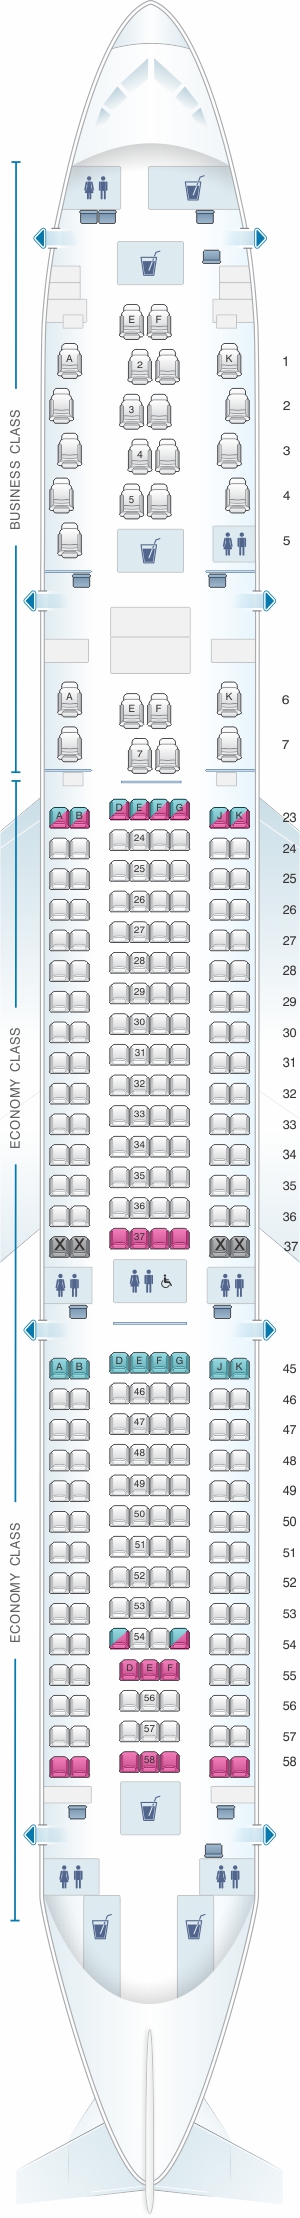 Seat map for Qantas Airways Airbus A330 200 Domestic 251PAX